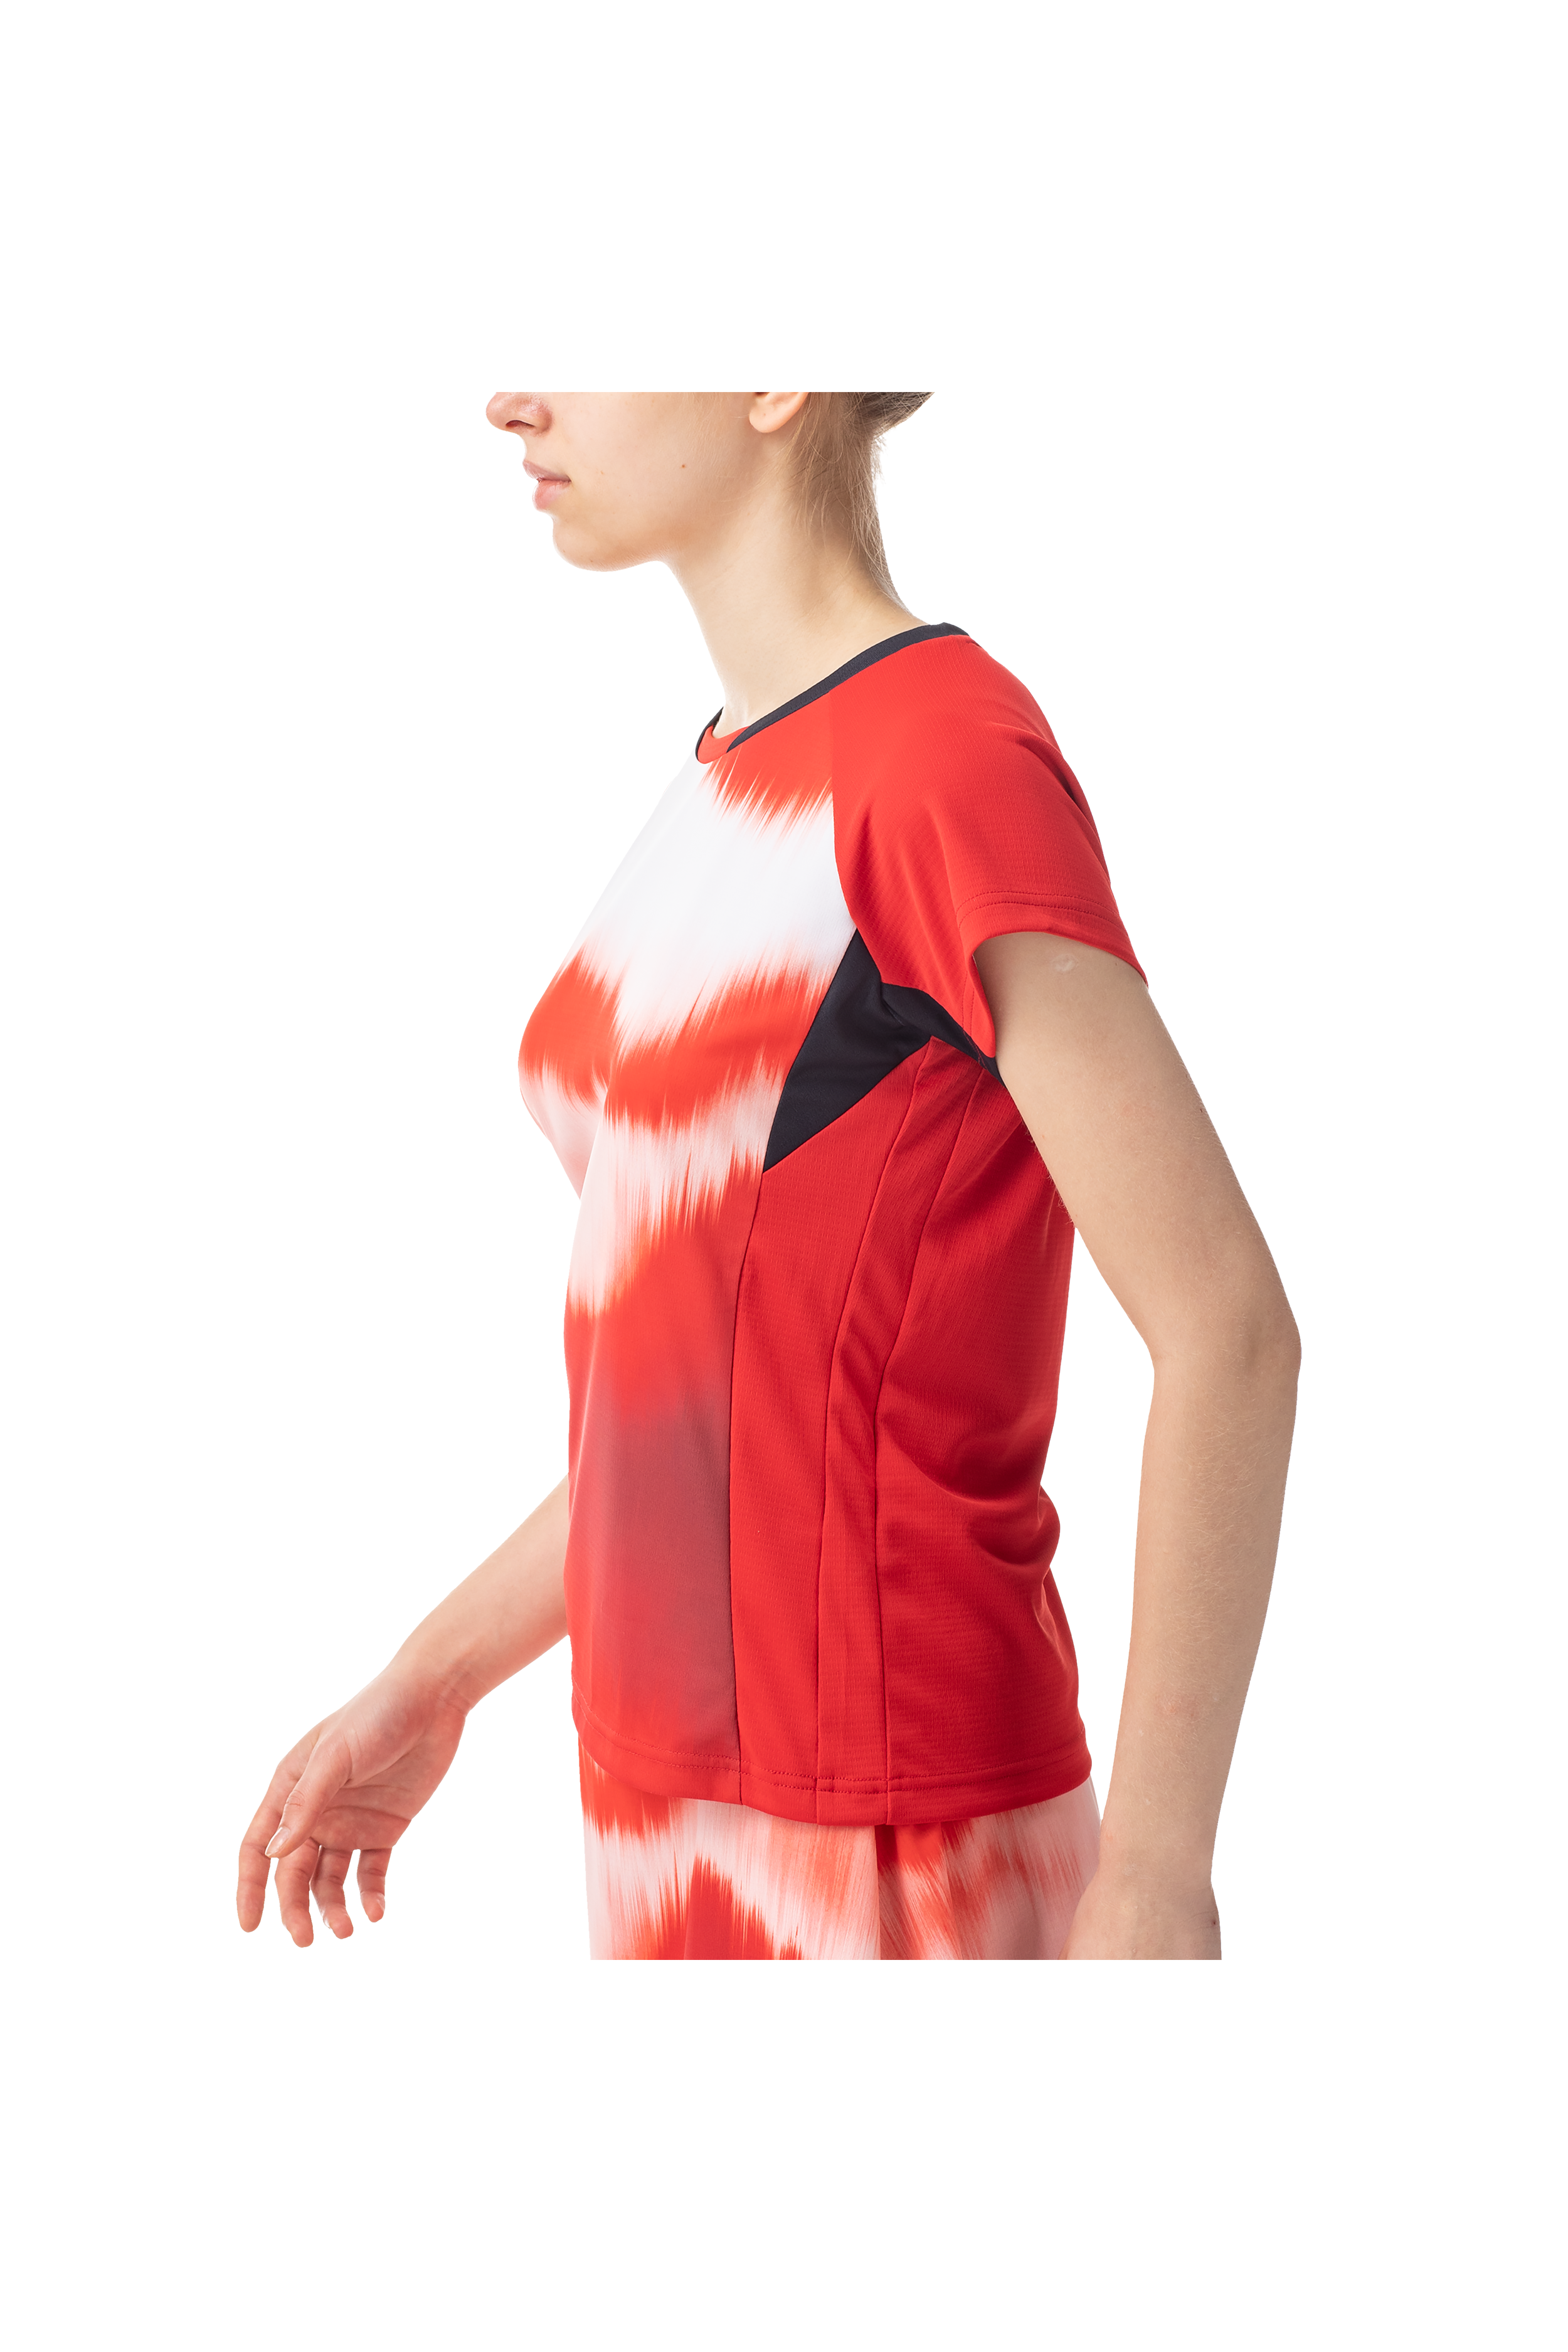 Yonex Women's Tournament Shirt 20641 (Tornado Red)